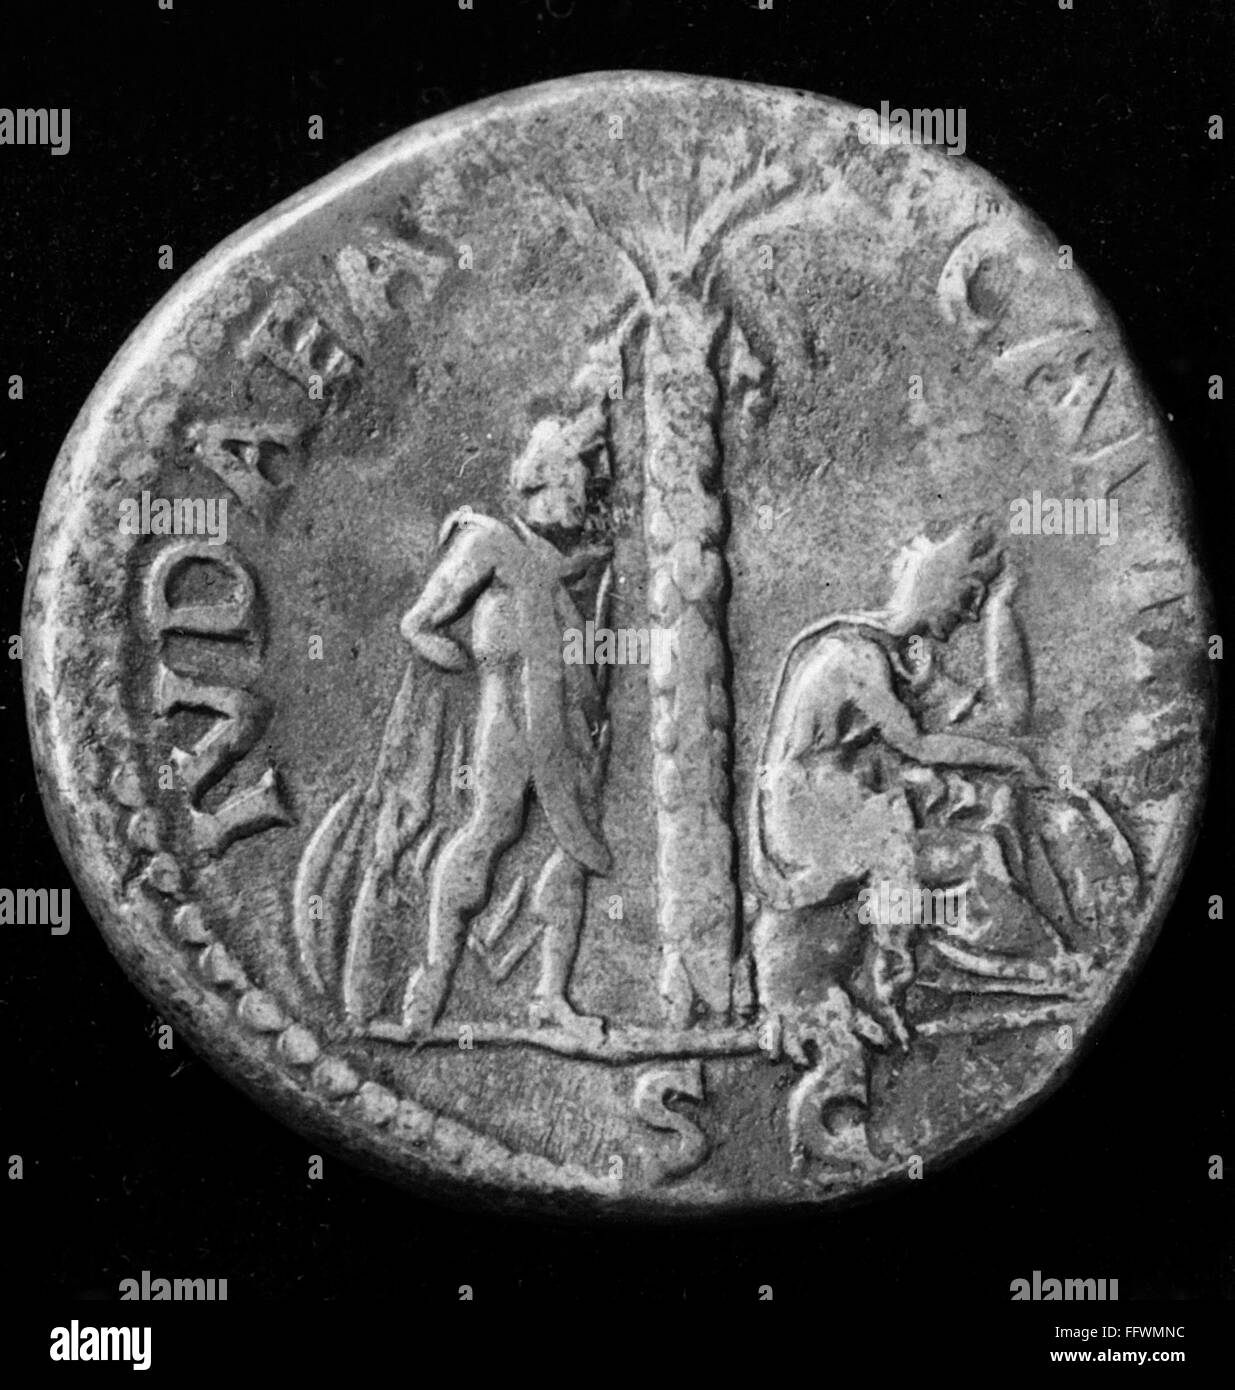 ROMAN COIN: JUDEA CAPTA. /nReverse of a Judea Capta coin, issued by the emperor Vespasian in commemoration of Rome's suppression of the Jewish Revolt in 70 A.D. Stock Photo